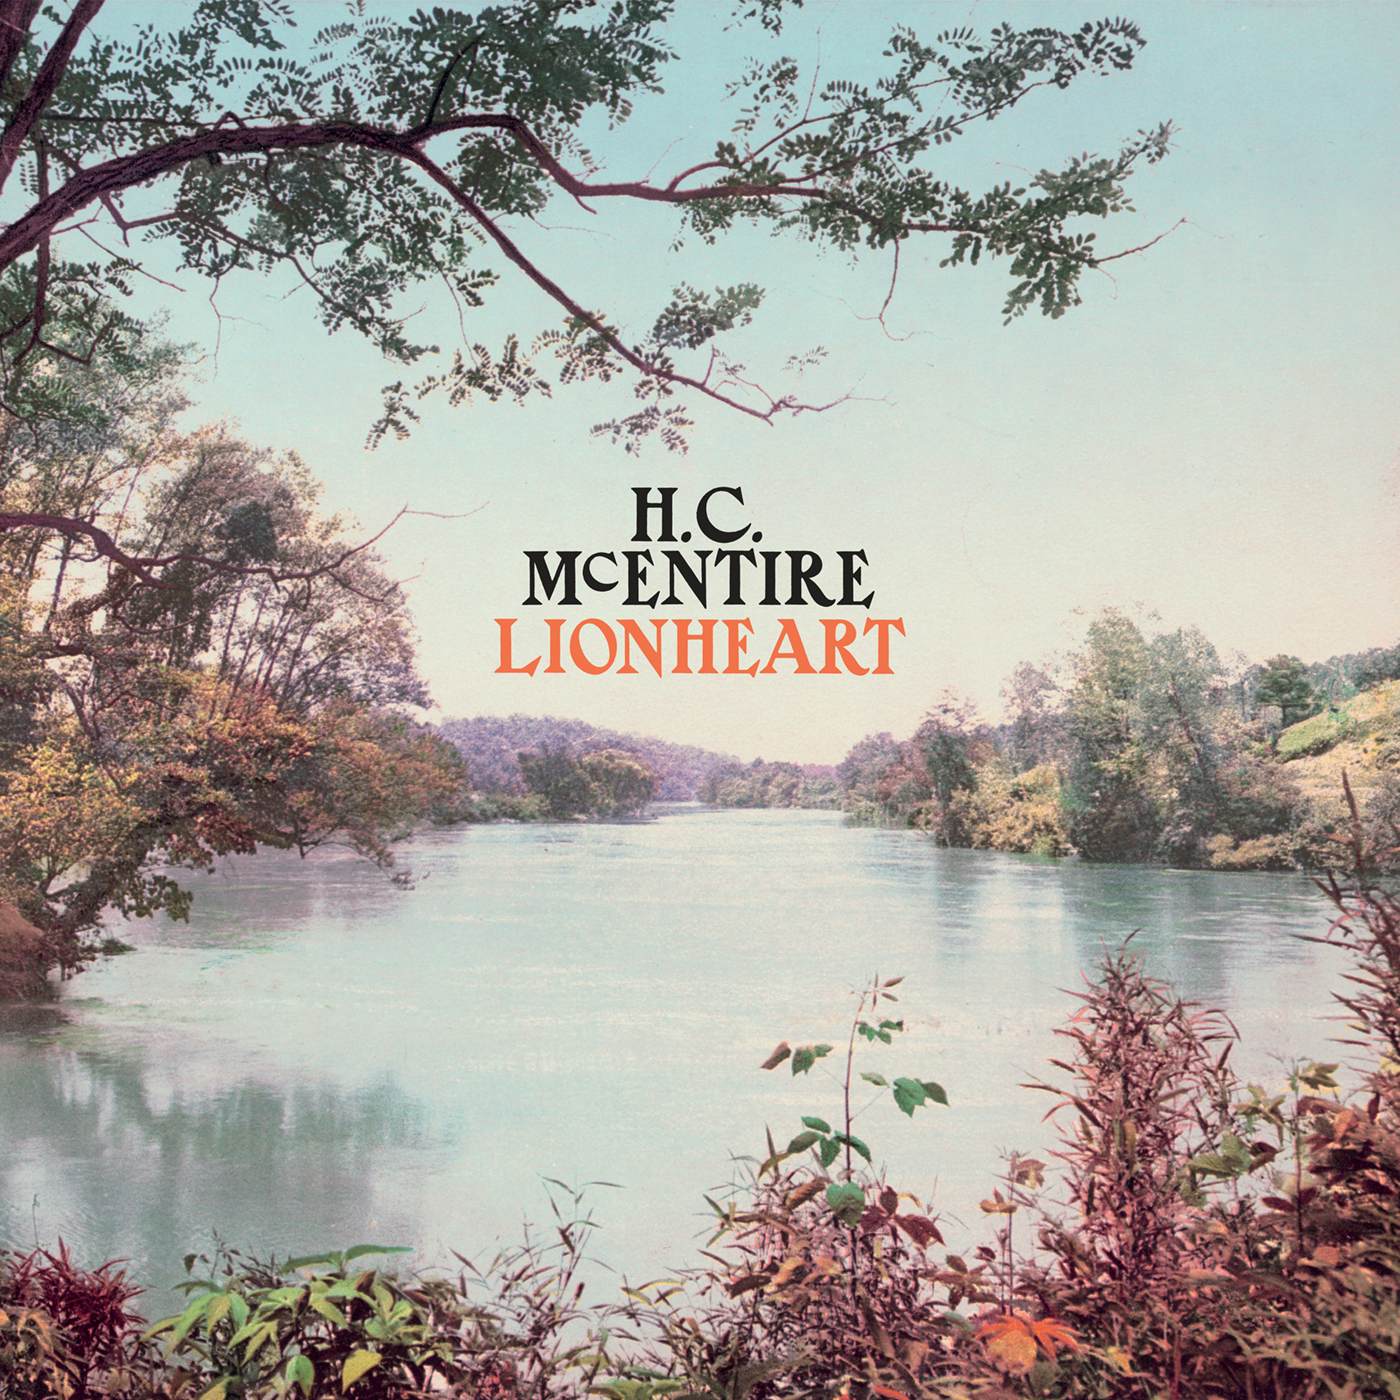 H.C. McEntire Lionheart Vinyl Record